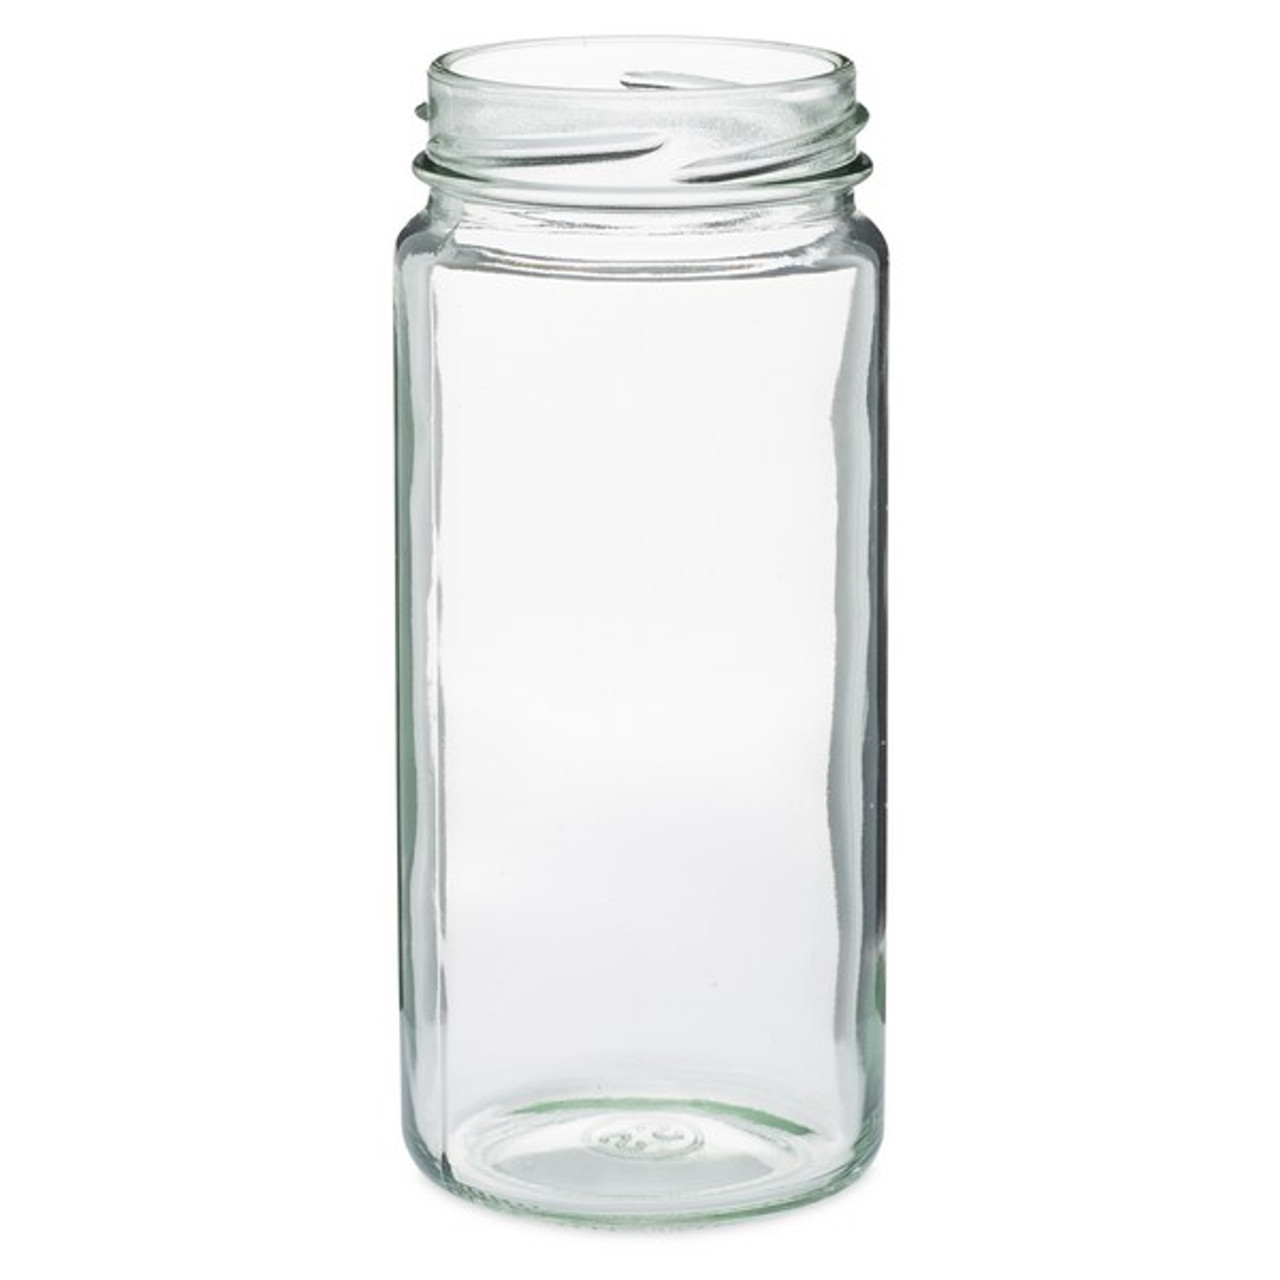 Bulk Glass Jars with Lids Wholesale